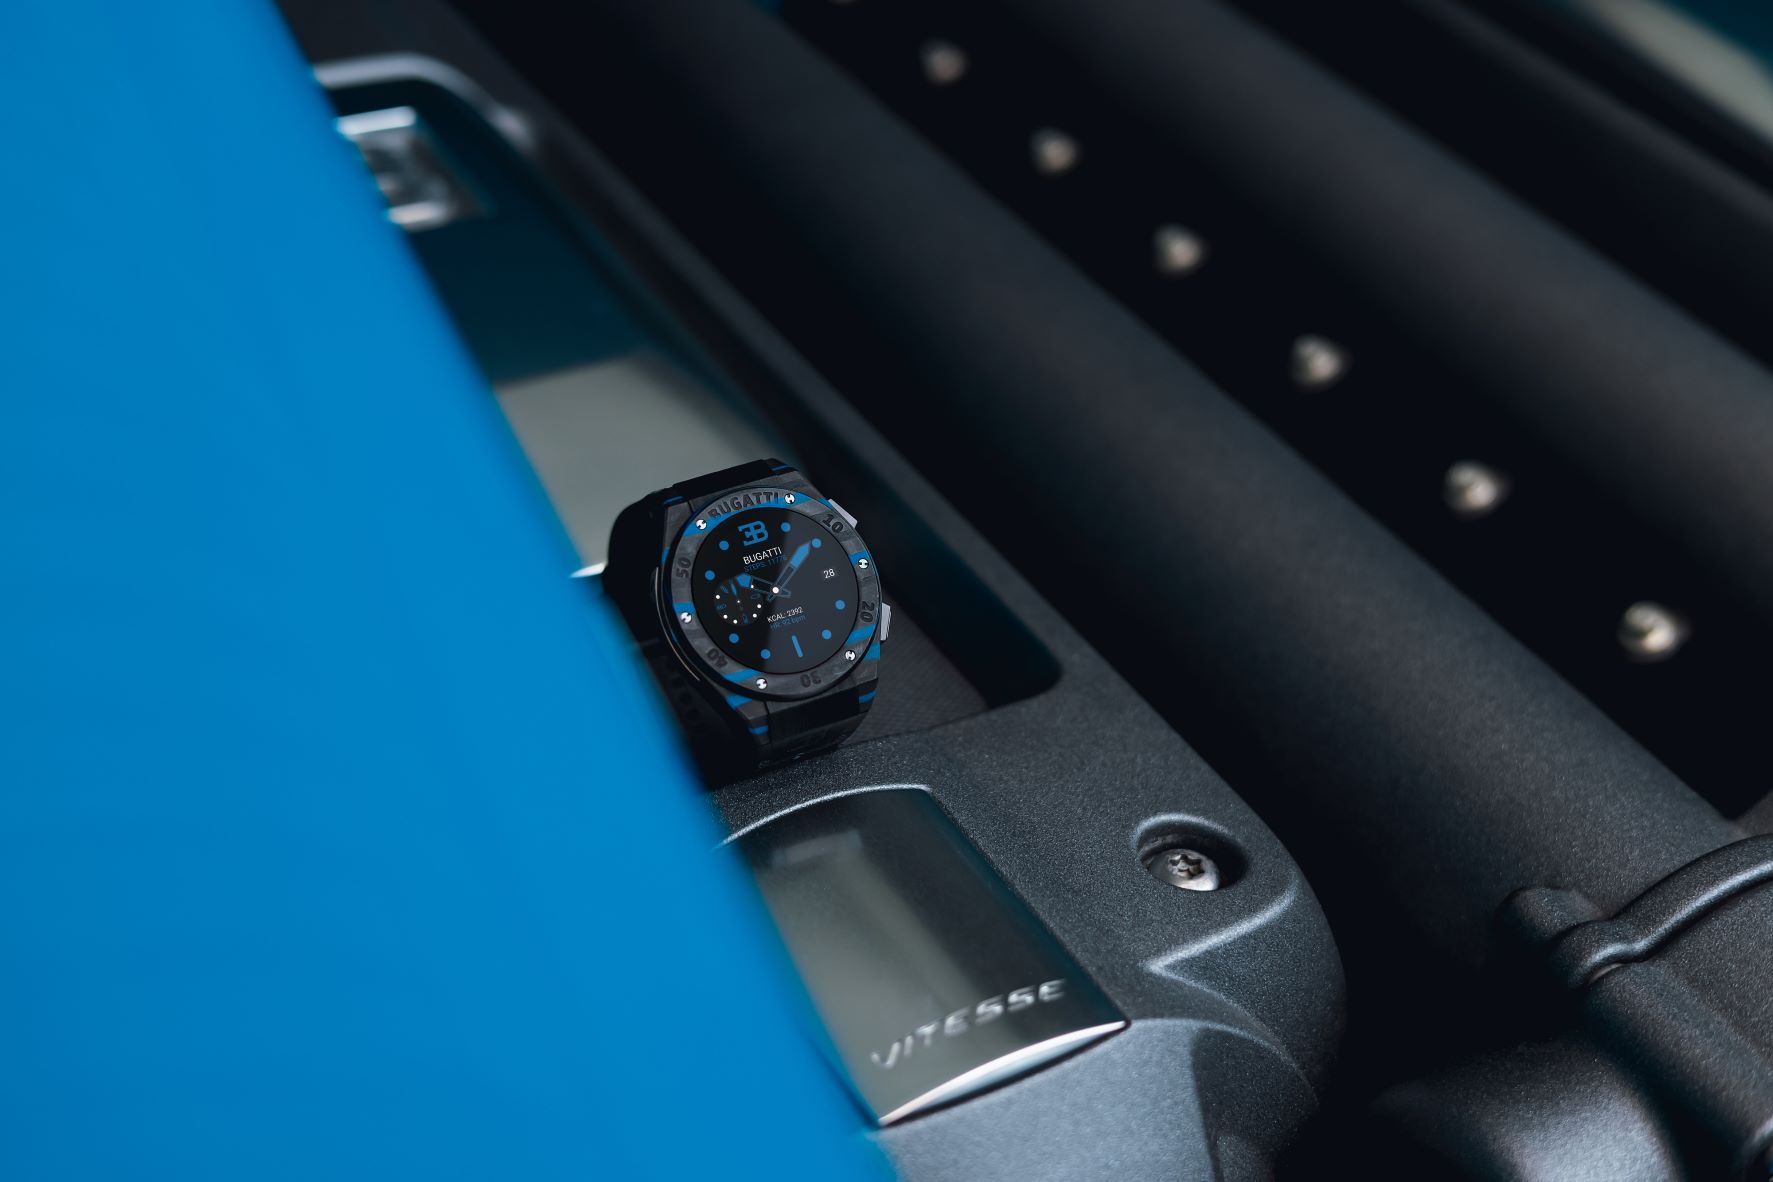 Bugatti Carbone limited edition smartwatch on the engine bay of a Bugatti Veyron hypercar in blue